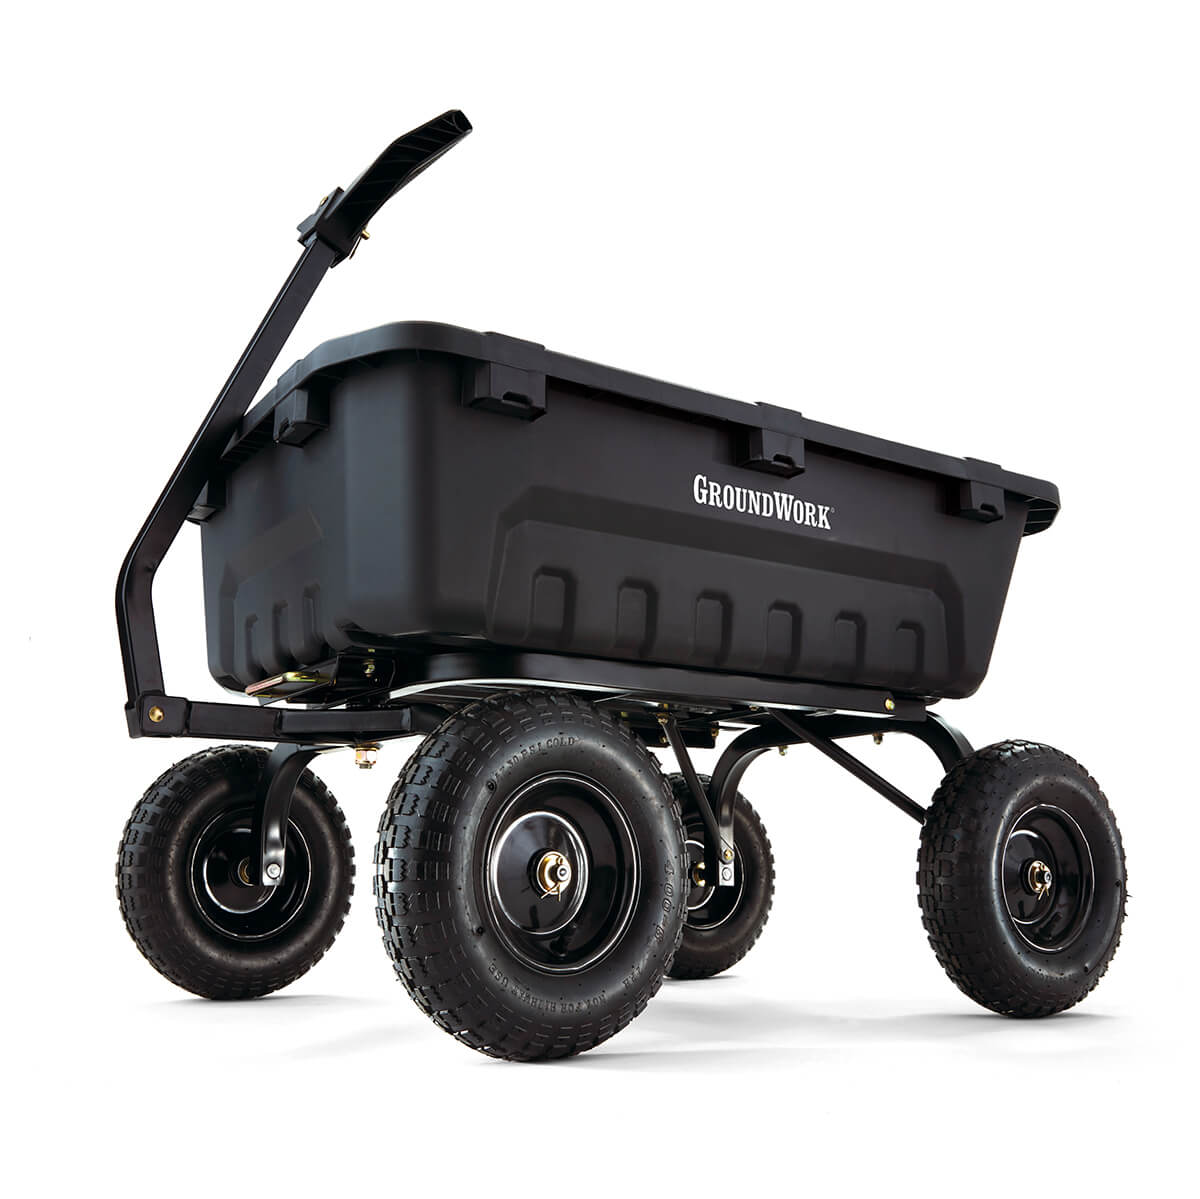 Gorilla Carts 6 Cu. Ft. 1000 Lb. Steel Tow-Behind Garden Cart